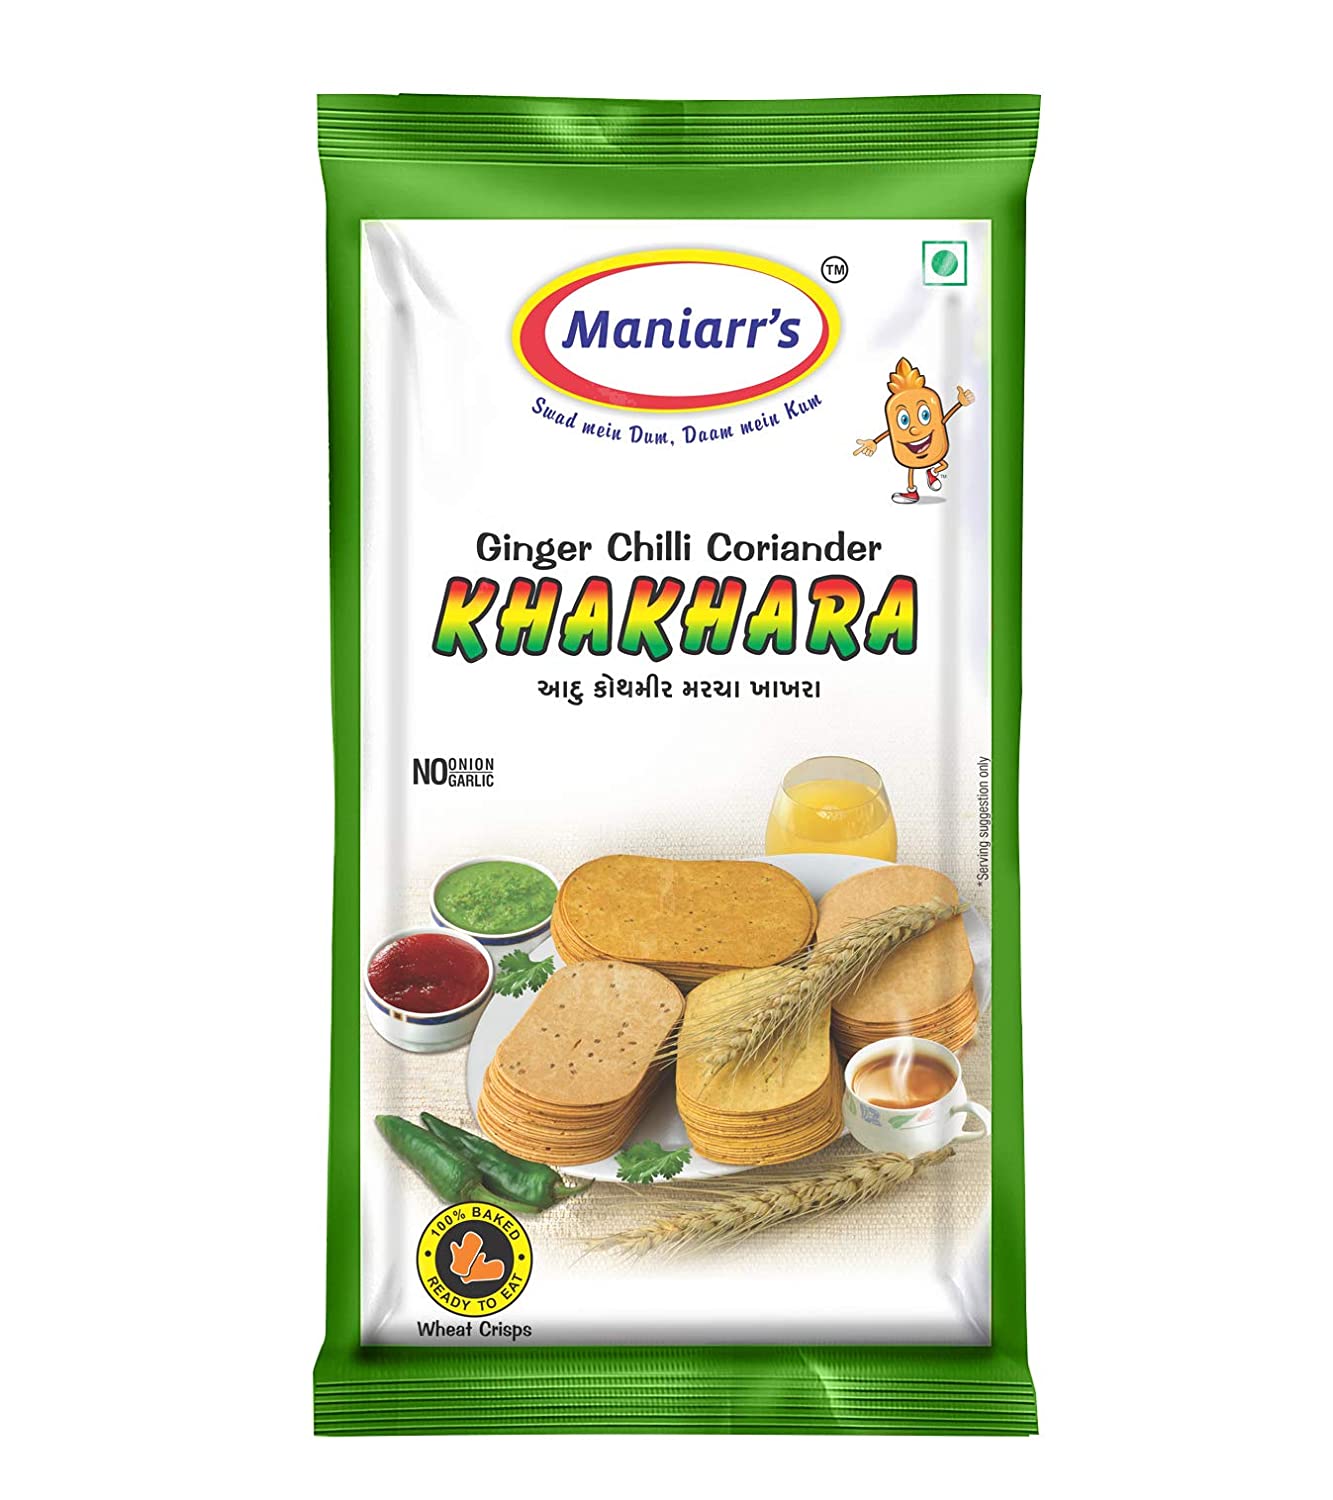 Maniarr's Ginger Chilli Coriander Khakhra Snacks Image